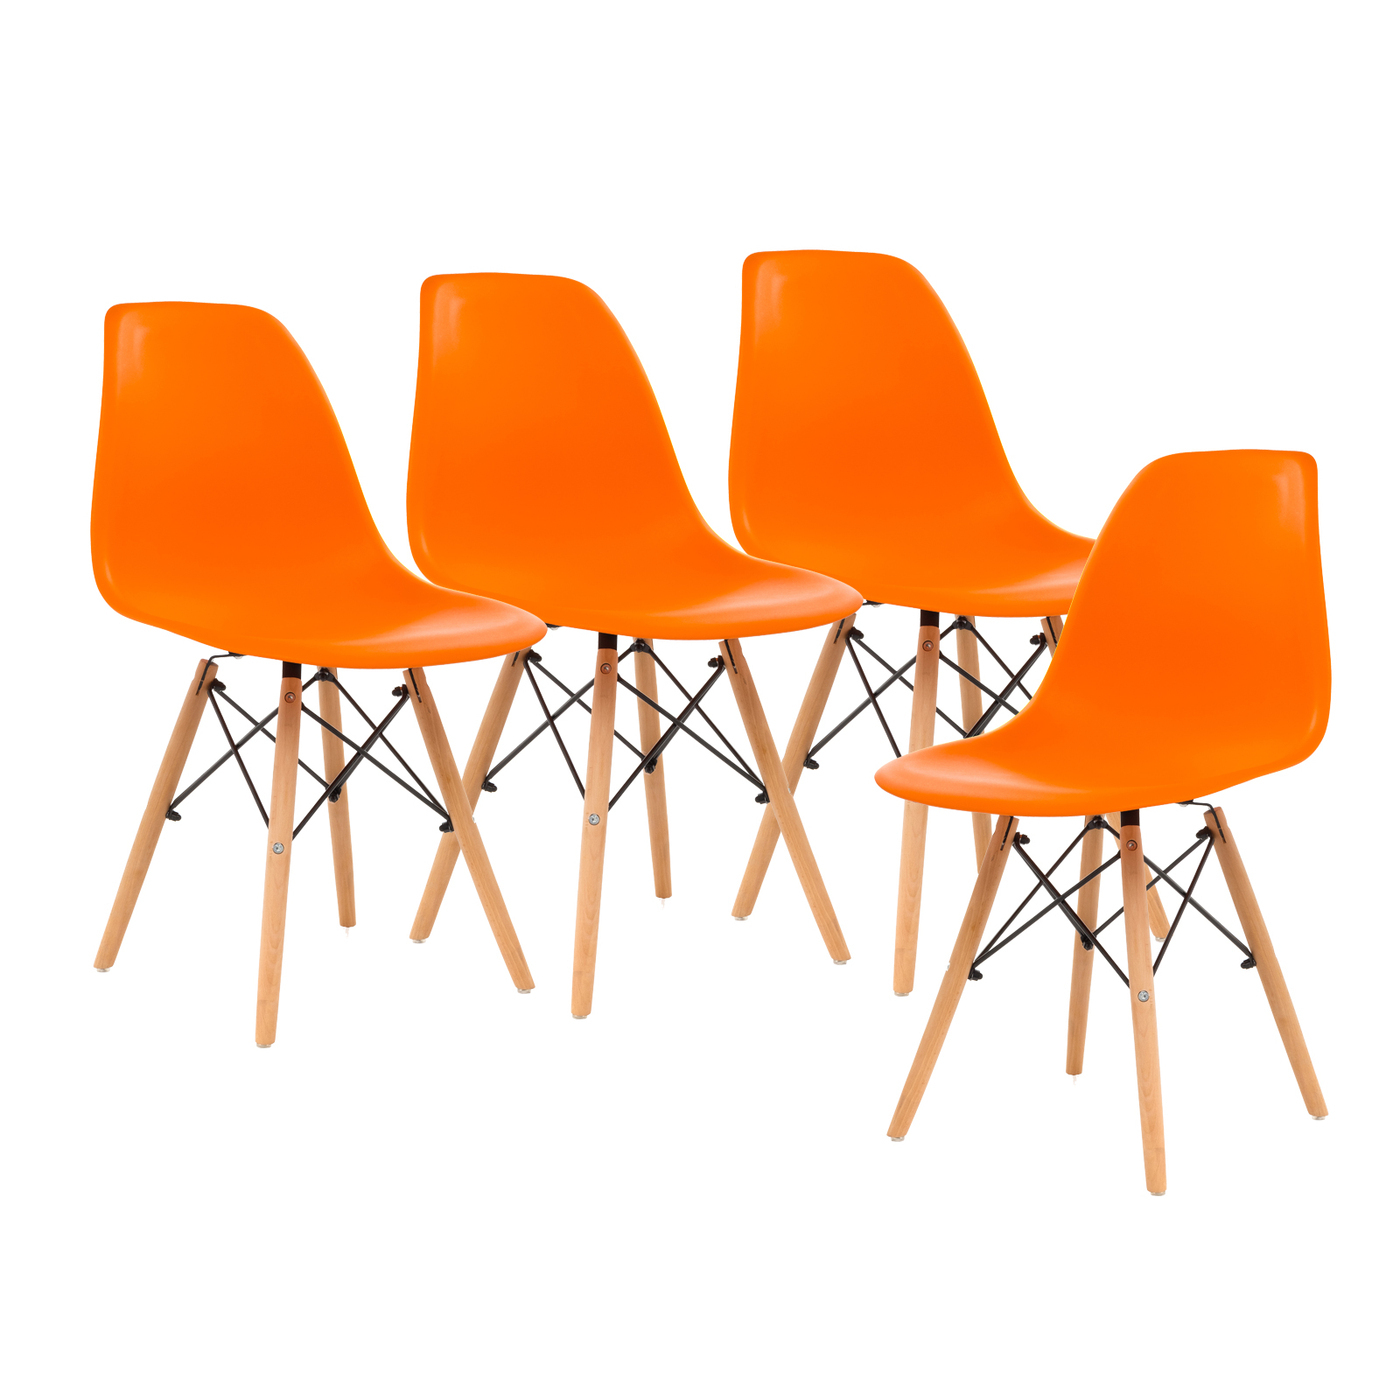 Комплект стульев 4 шт для кухни. Eames PC-015. Стул Eames, серый, ZT-1-1g, 4 шт.. Стул "Eames" GH-8088. Стул Eames оранжевый.